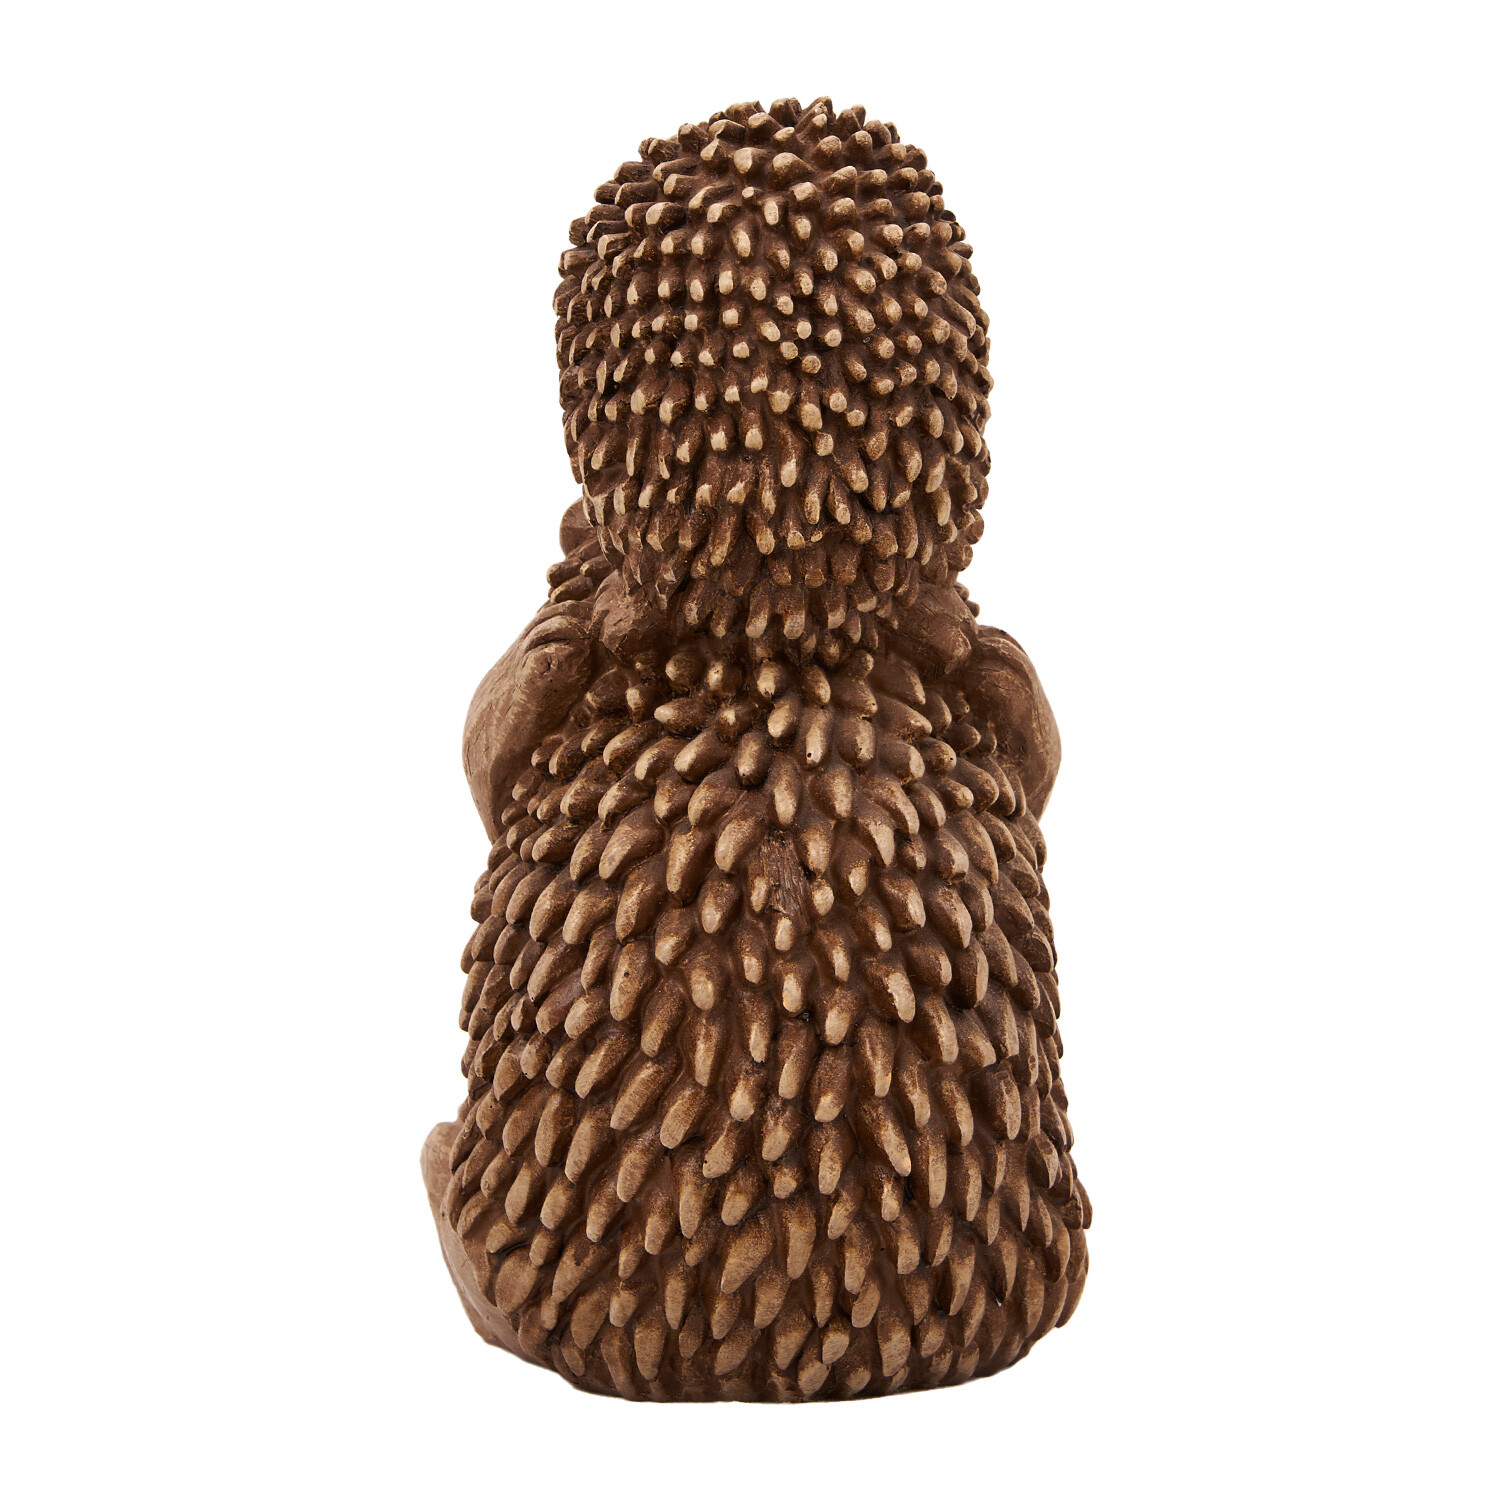 Brown Hedgehog Ornament Image 3